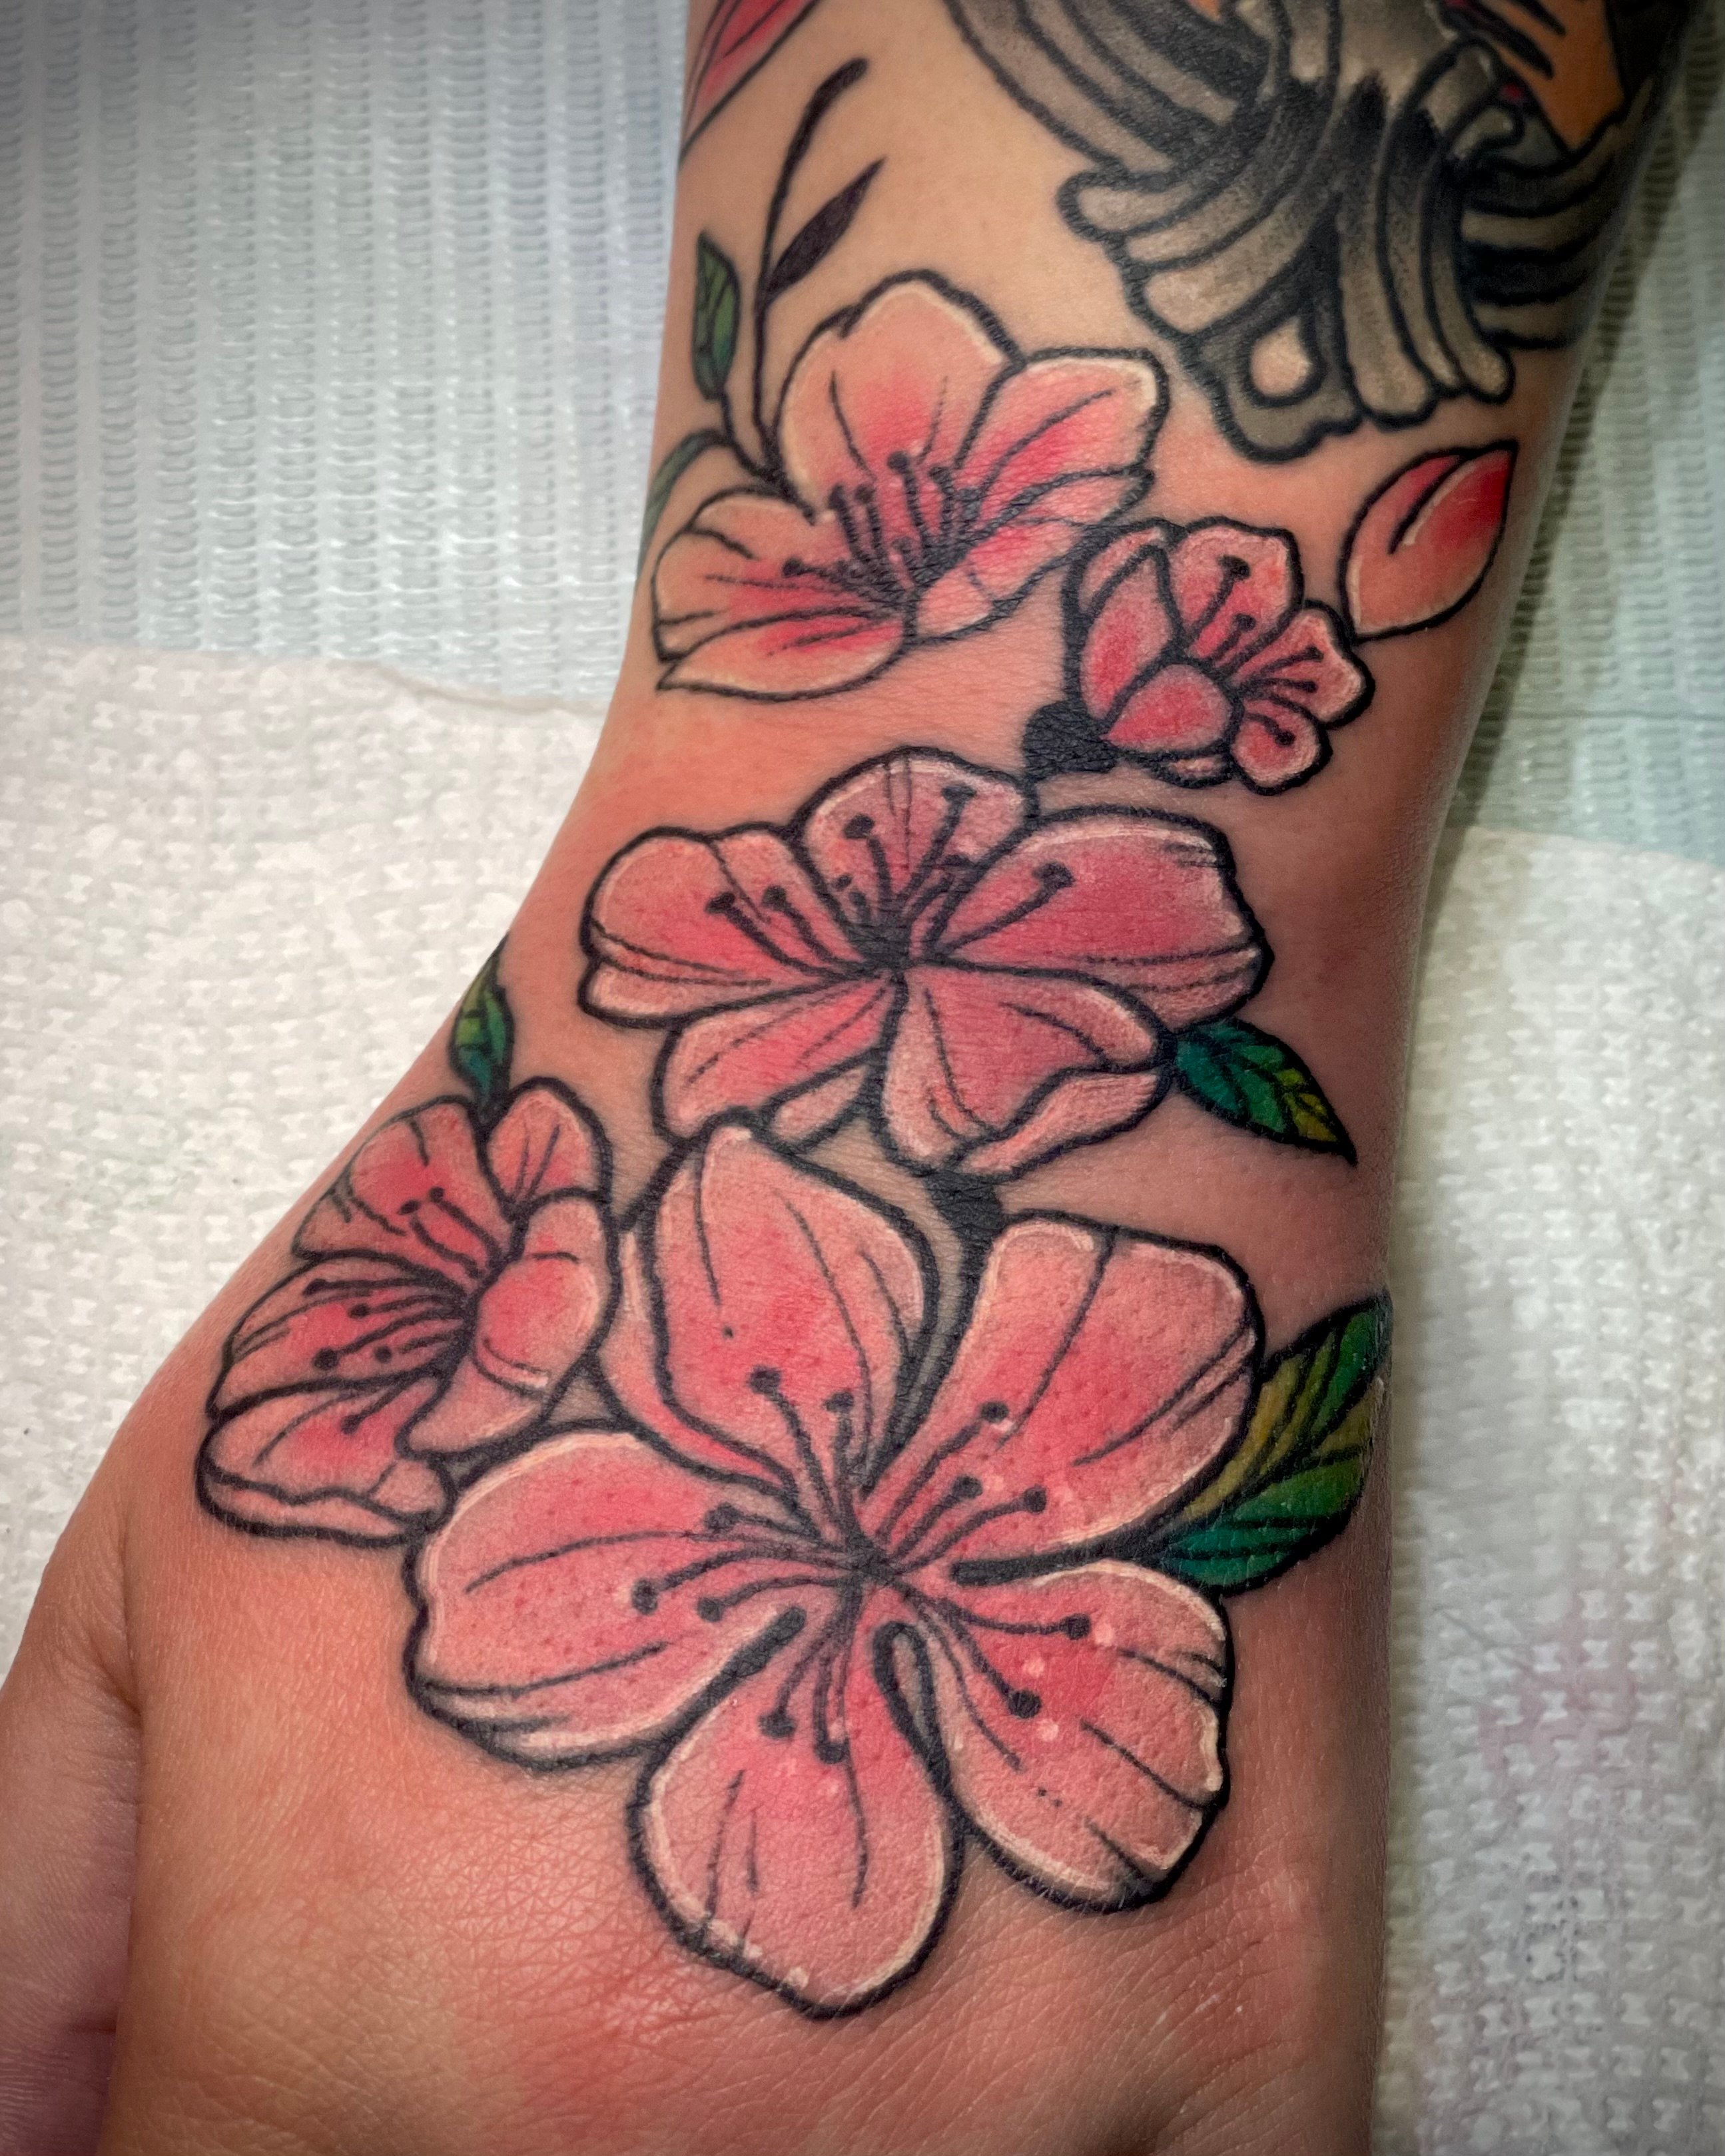 Tattoos For Women - Flowers